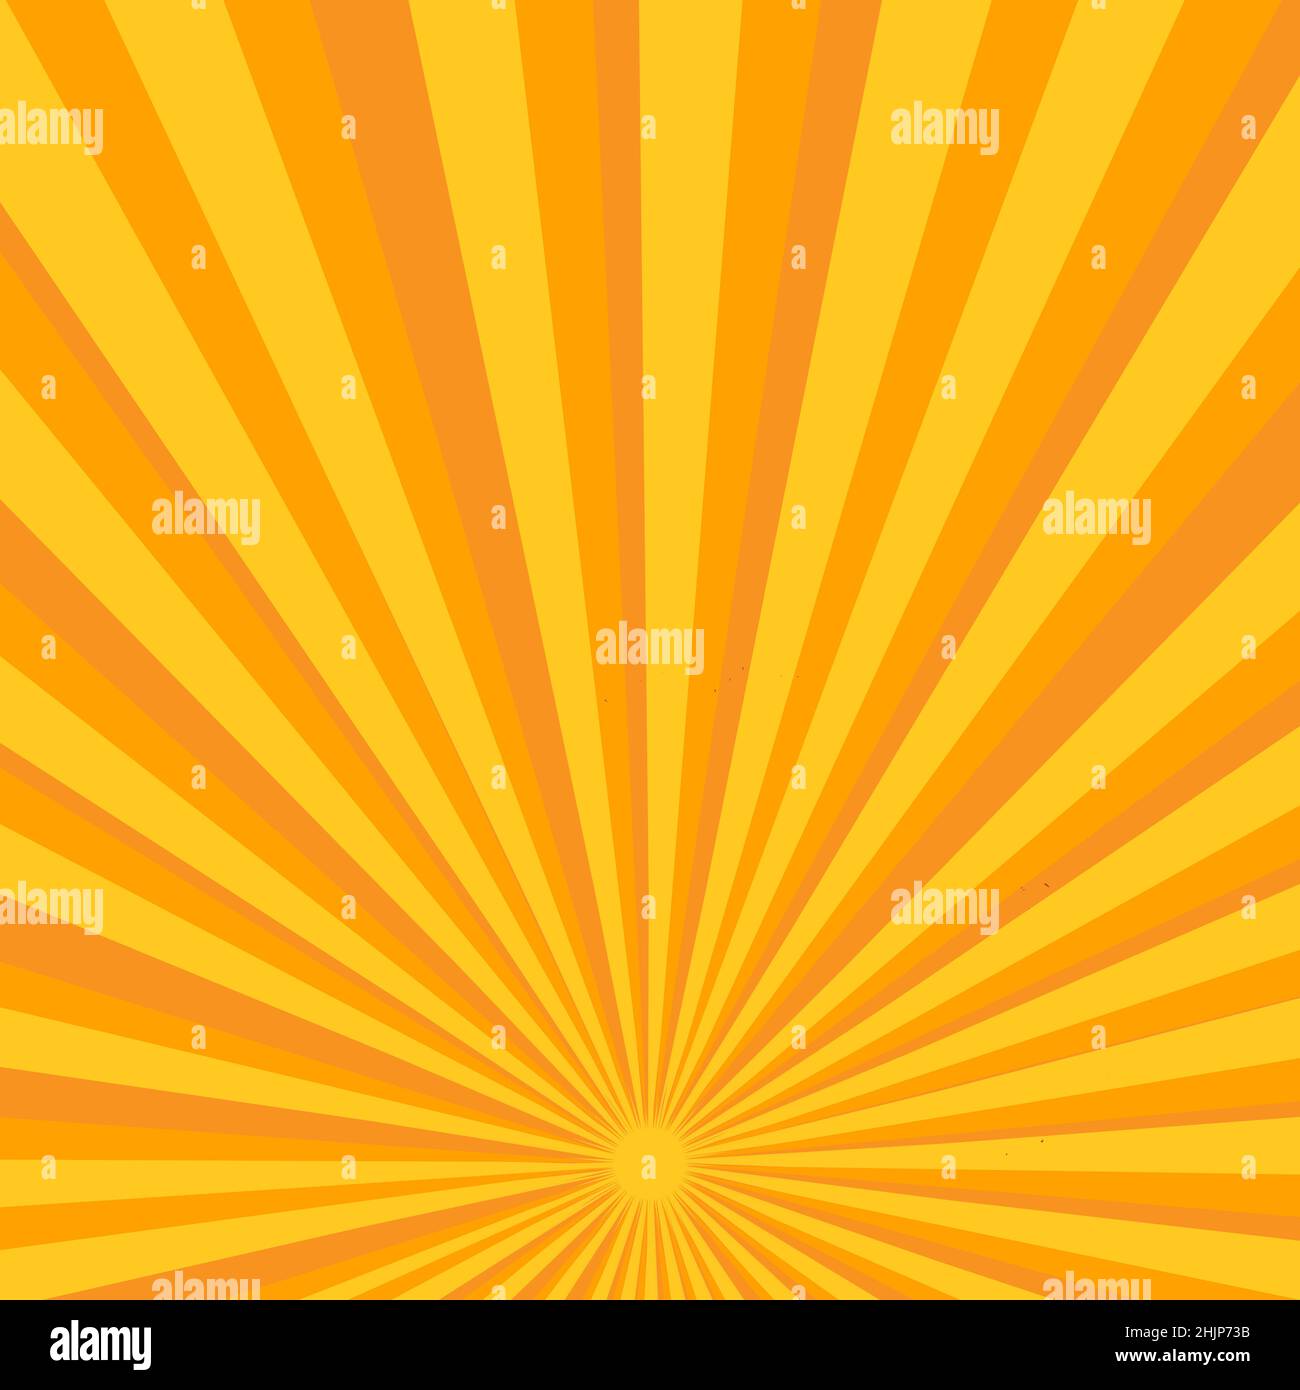 retro style orange and yellow sunburst background, vector illustration Stock Vector